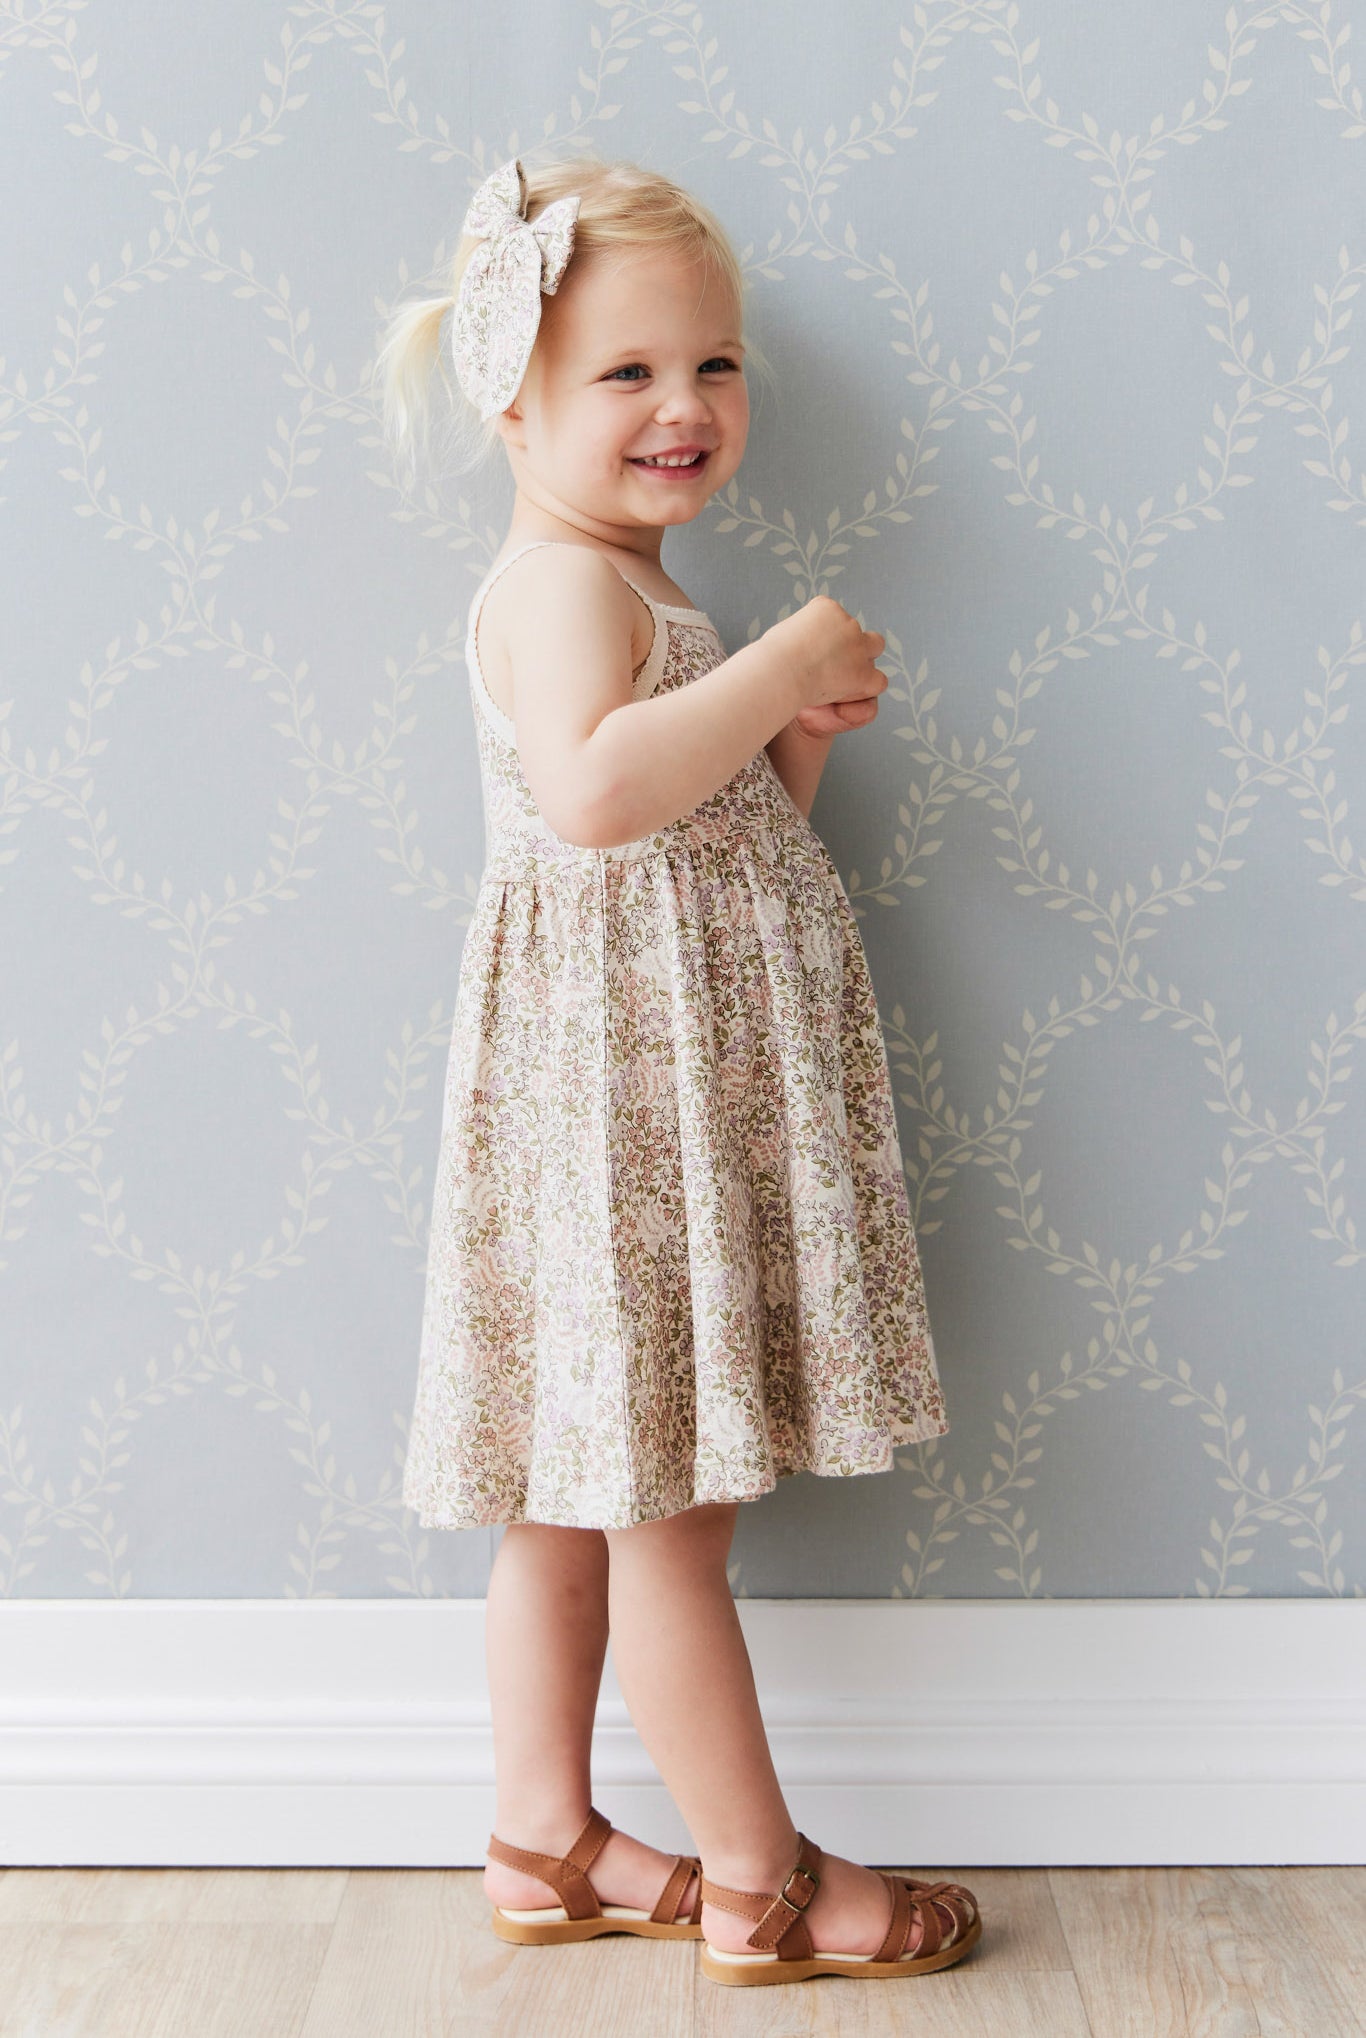 5 year old Jamie Kay dress